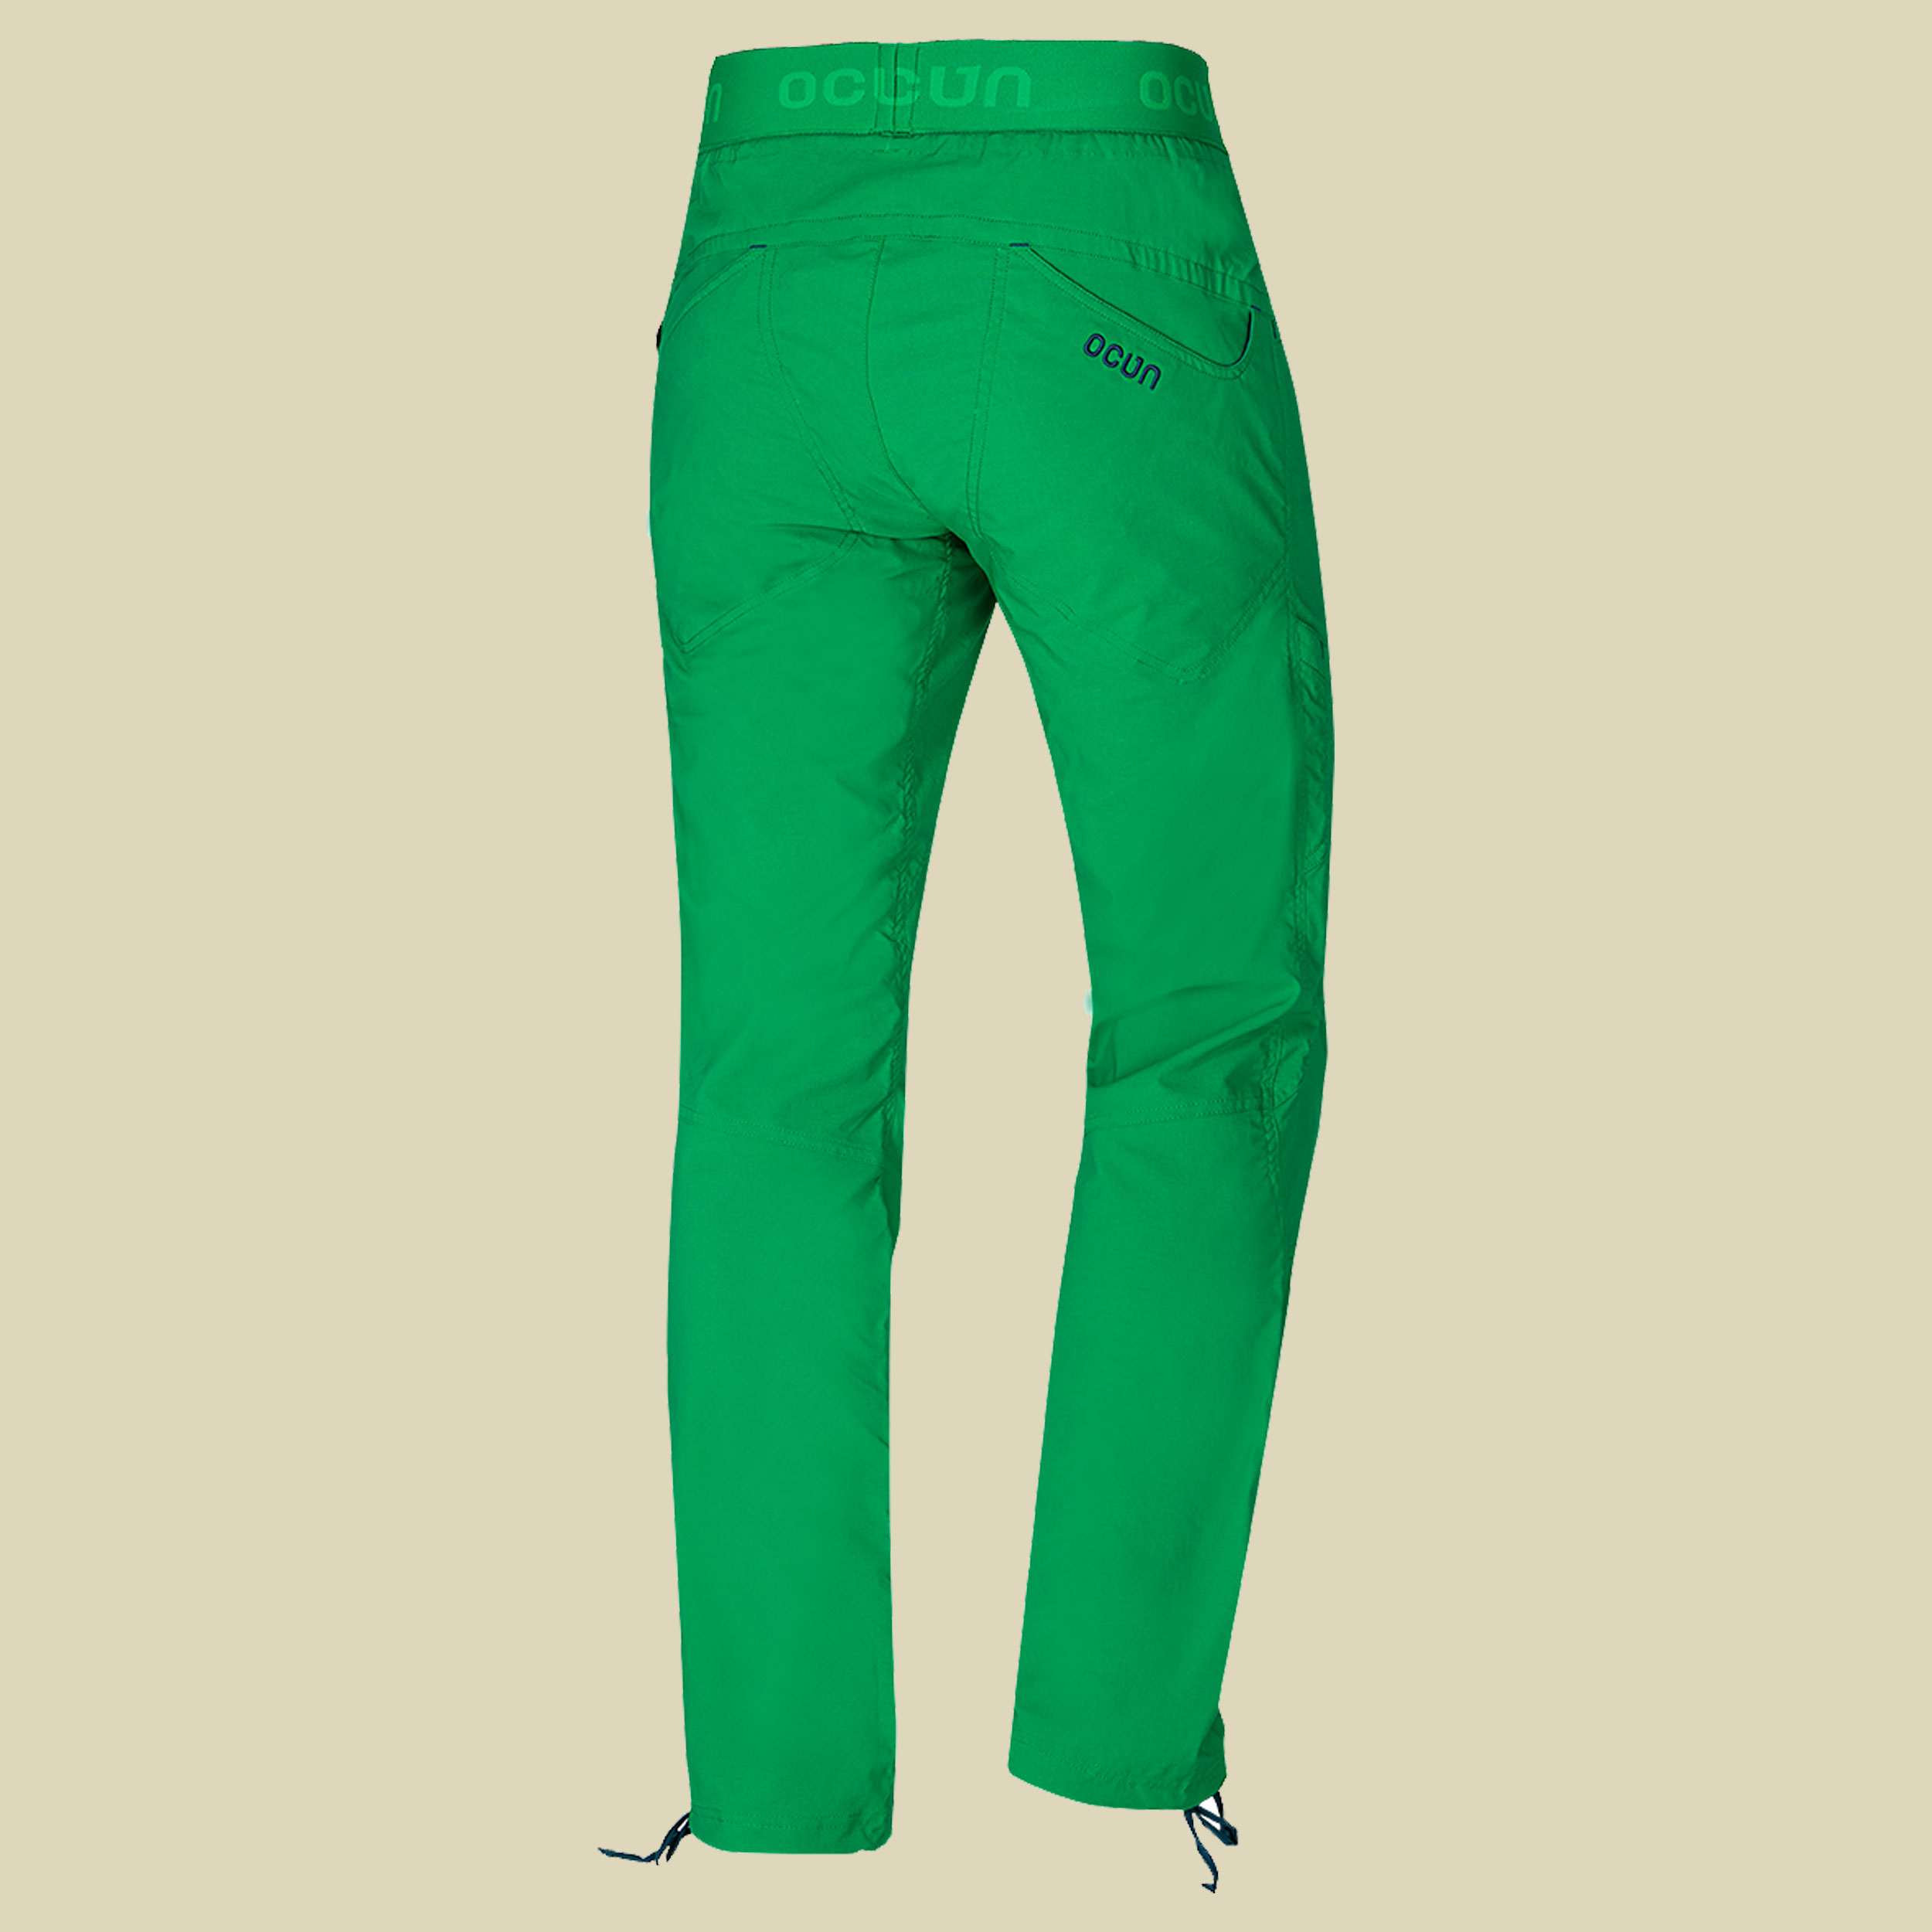 Mania Pants Men Größe S Farbe green/navy